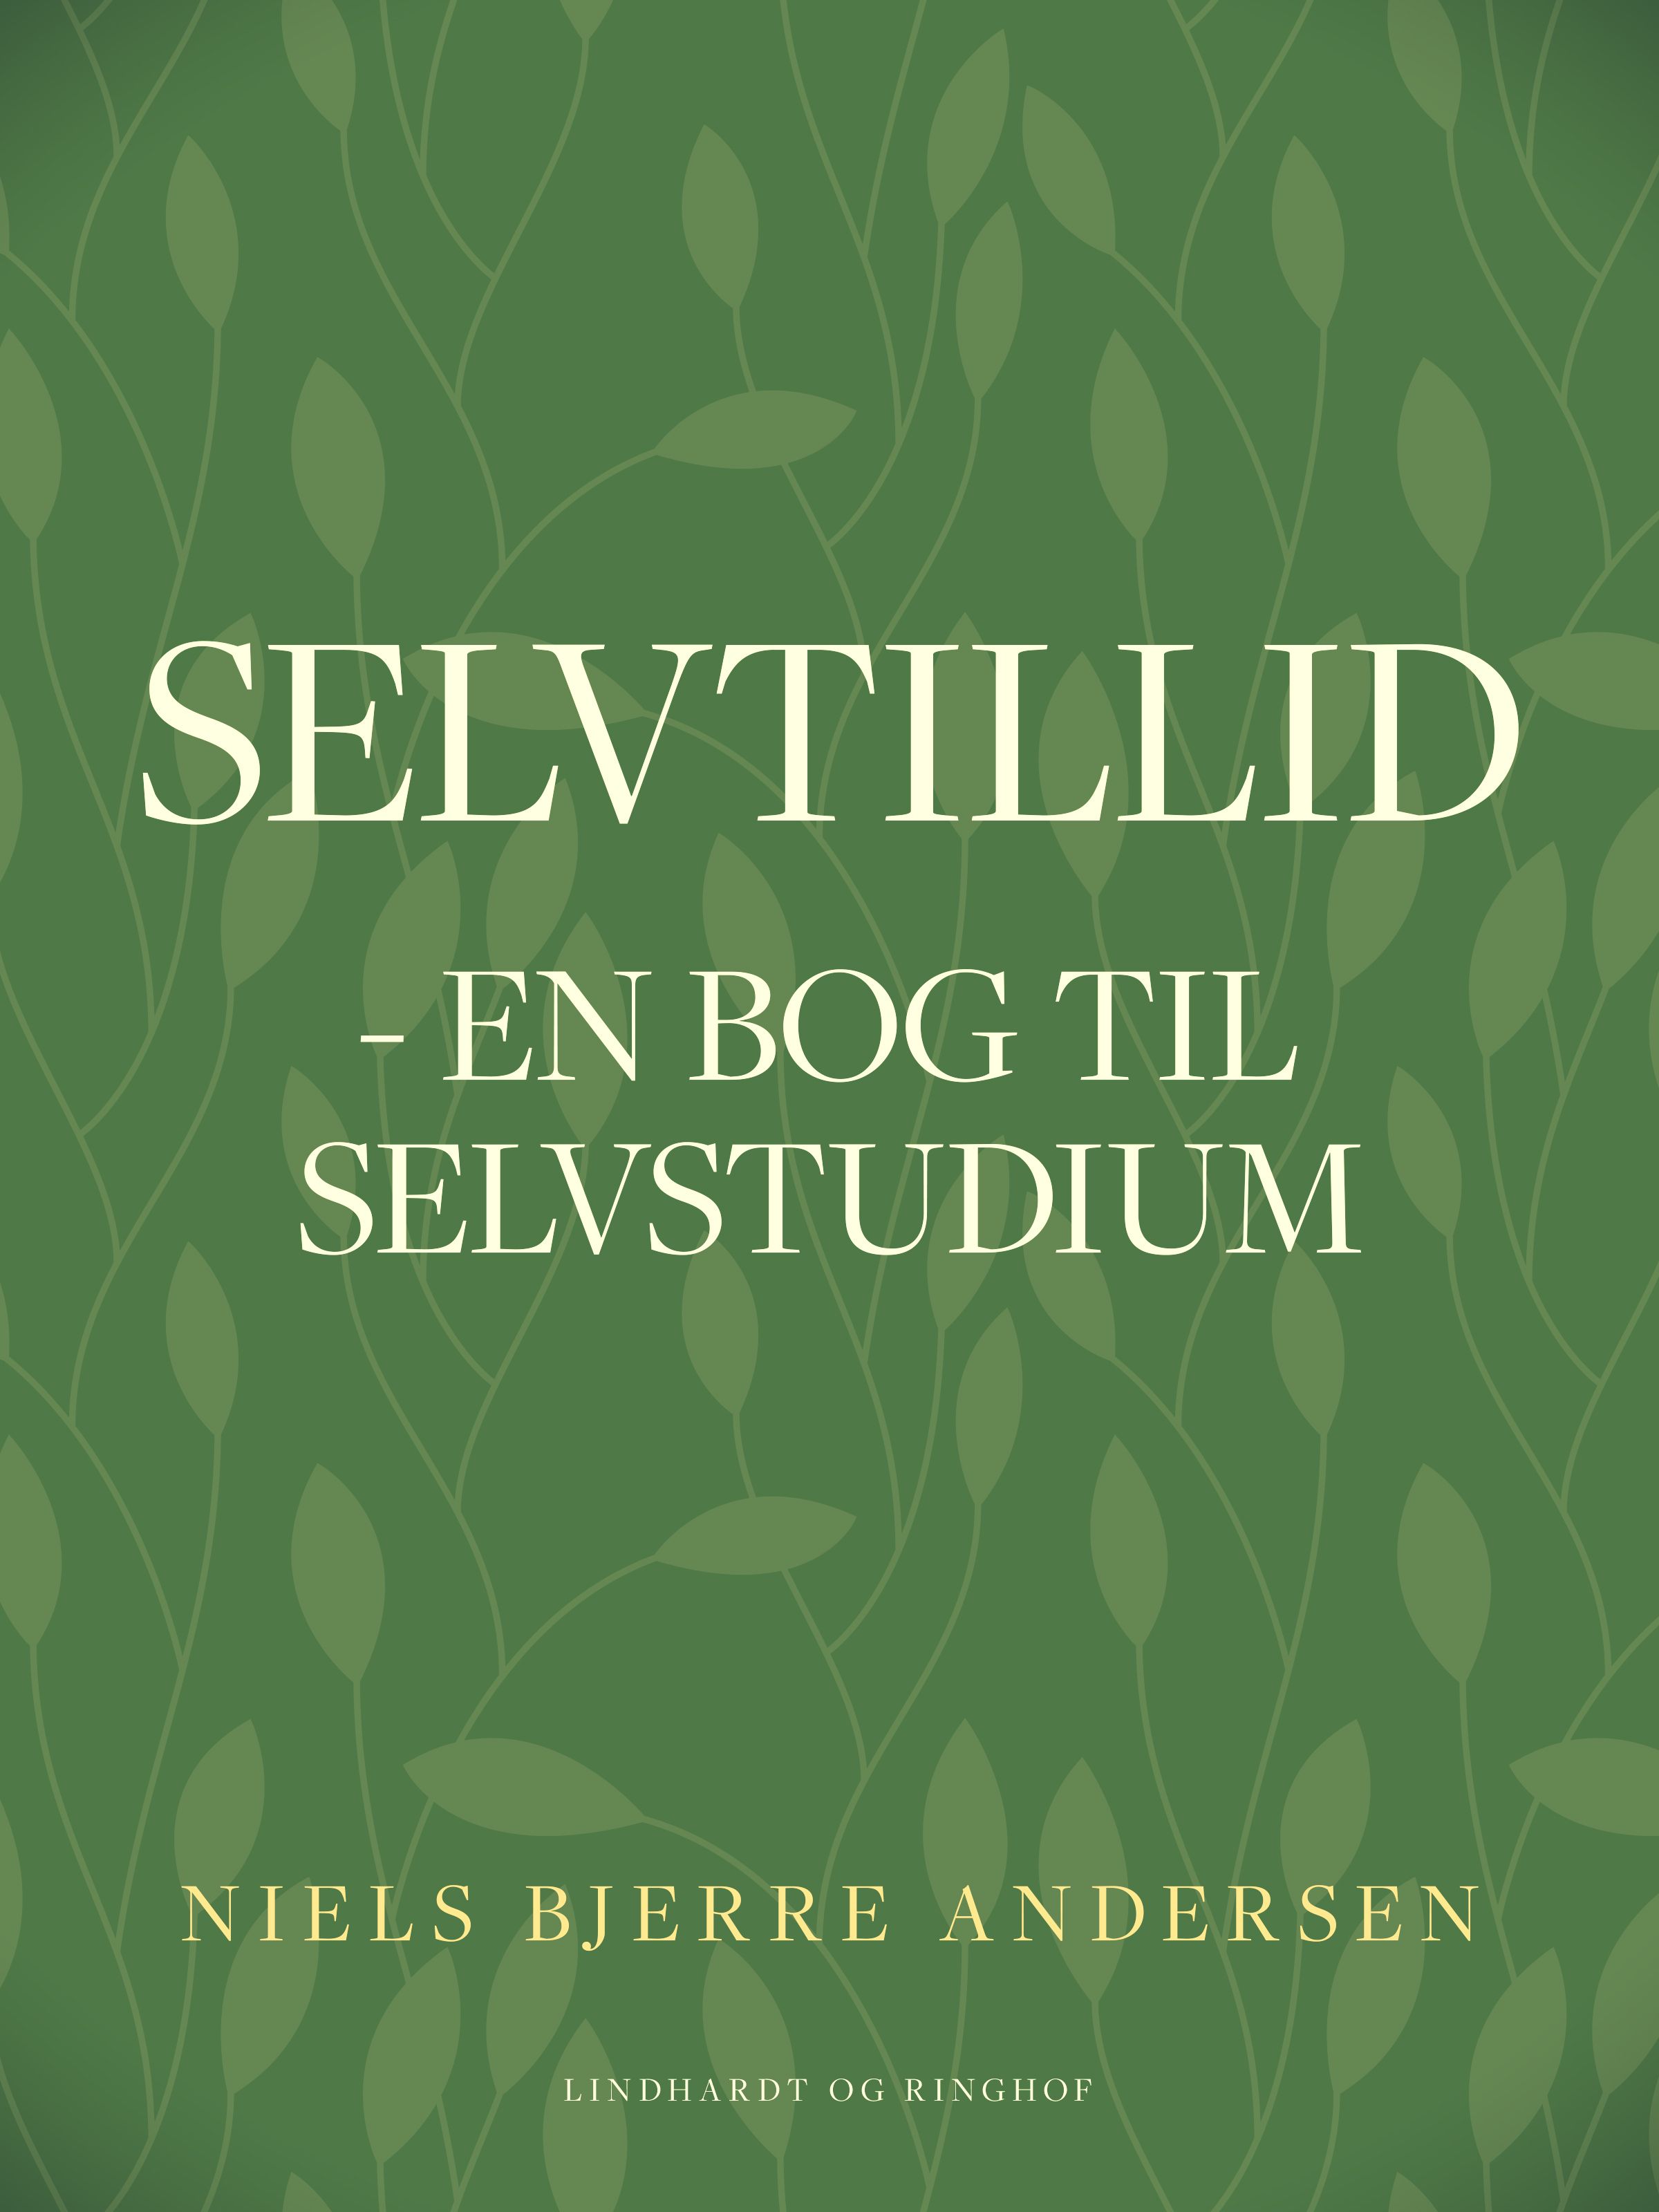 Selvtillid: en bog til selvstudium, e-bok av Niels Bjerre Andersen